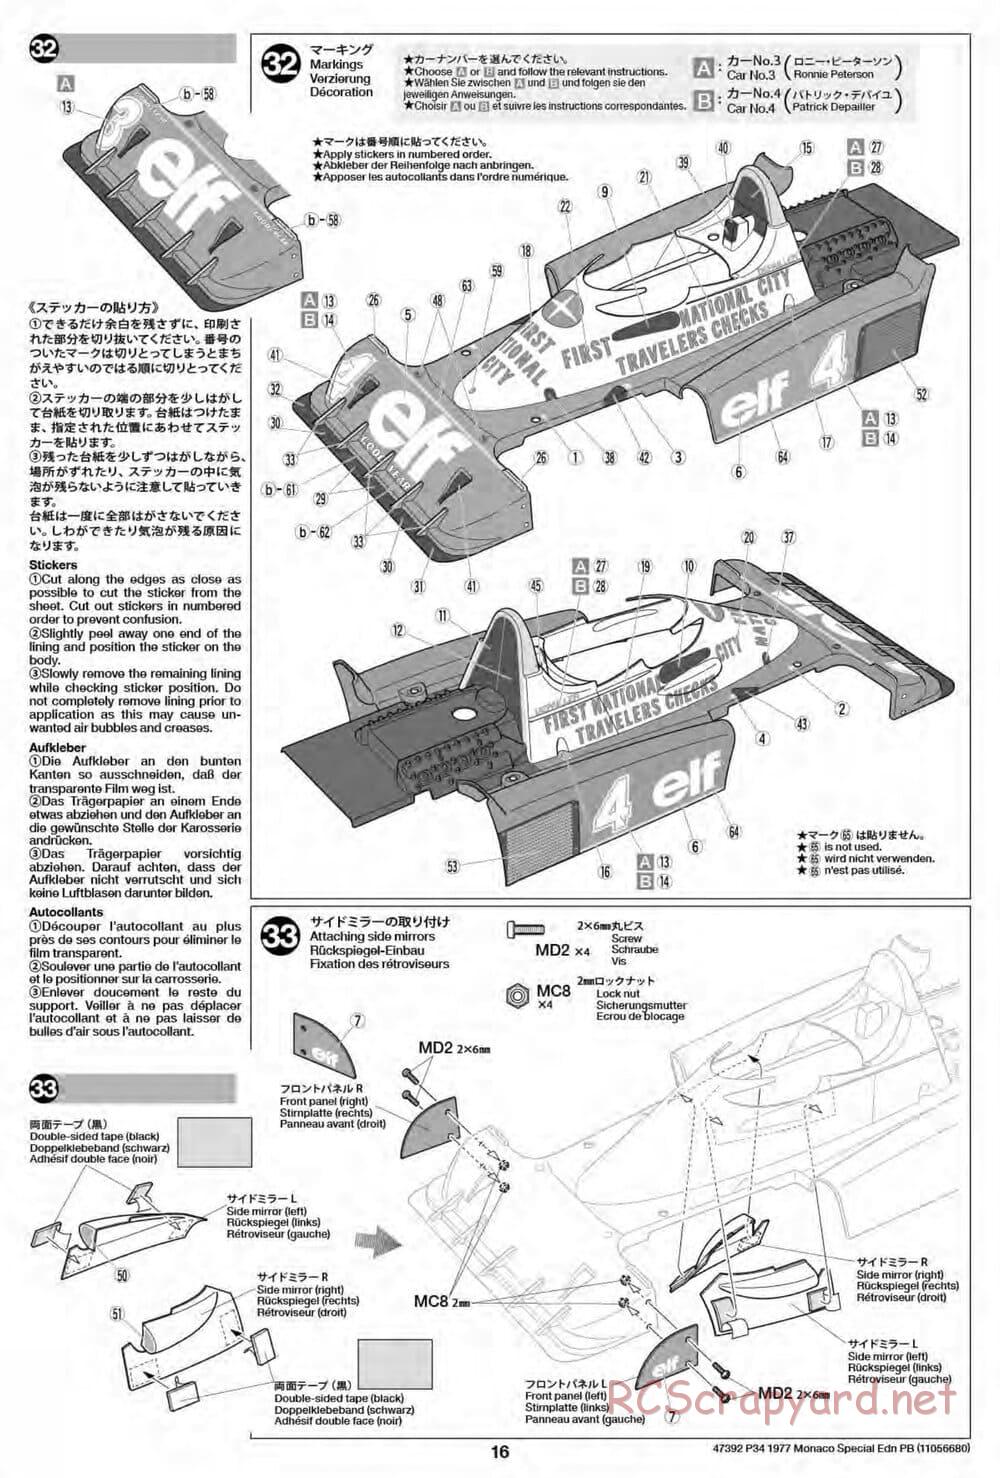 Tamiya - Tyrrell P34 Six Wheeler 1977 Monaco GP - F103-6W Chassis - Manual - Page 16